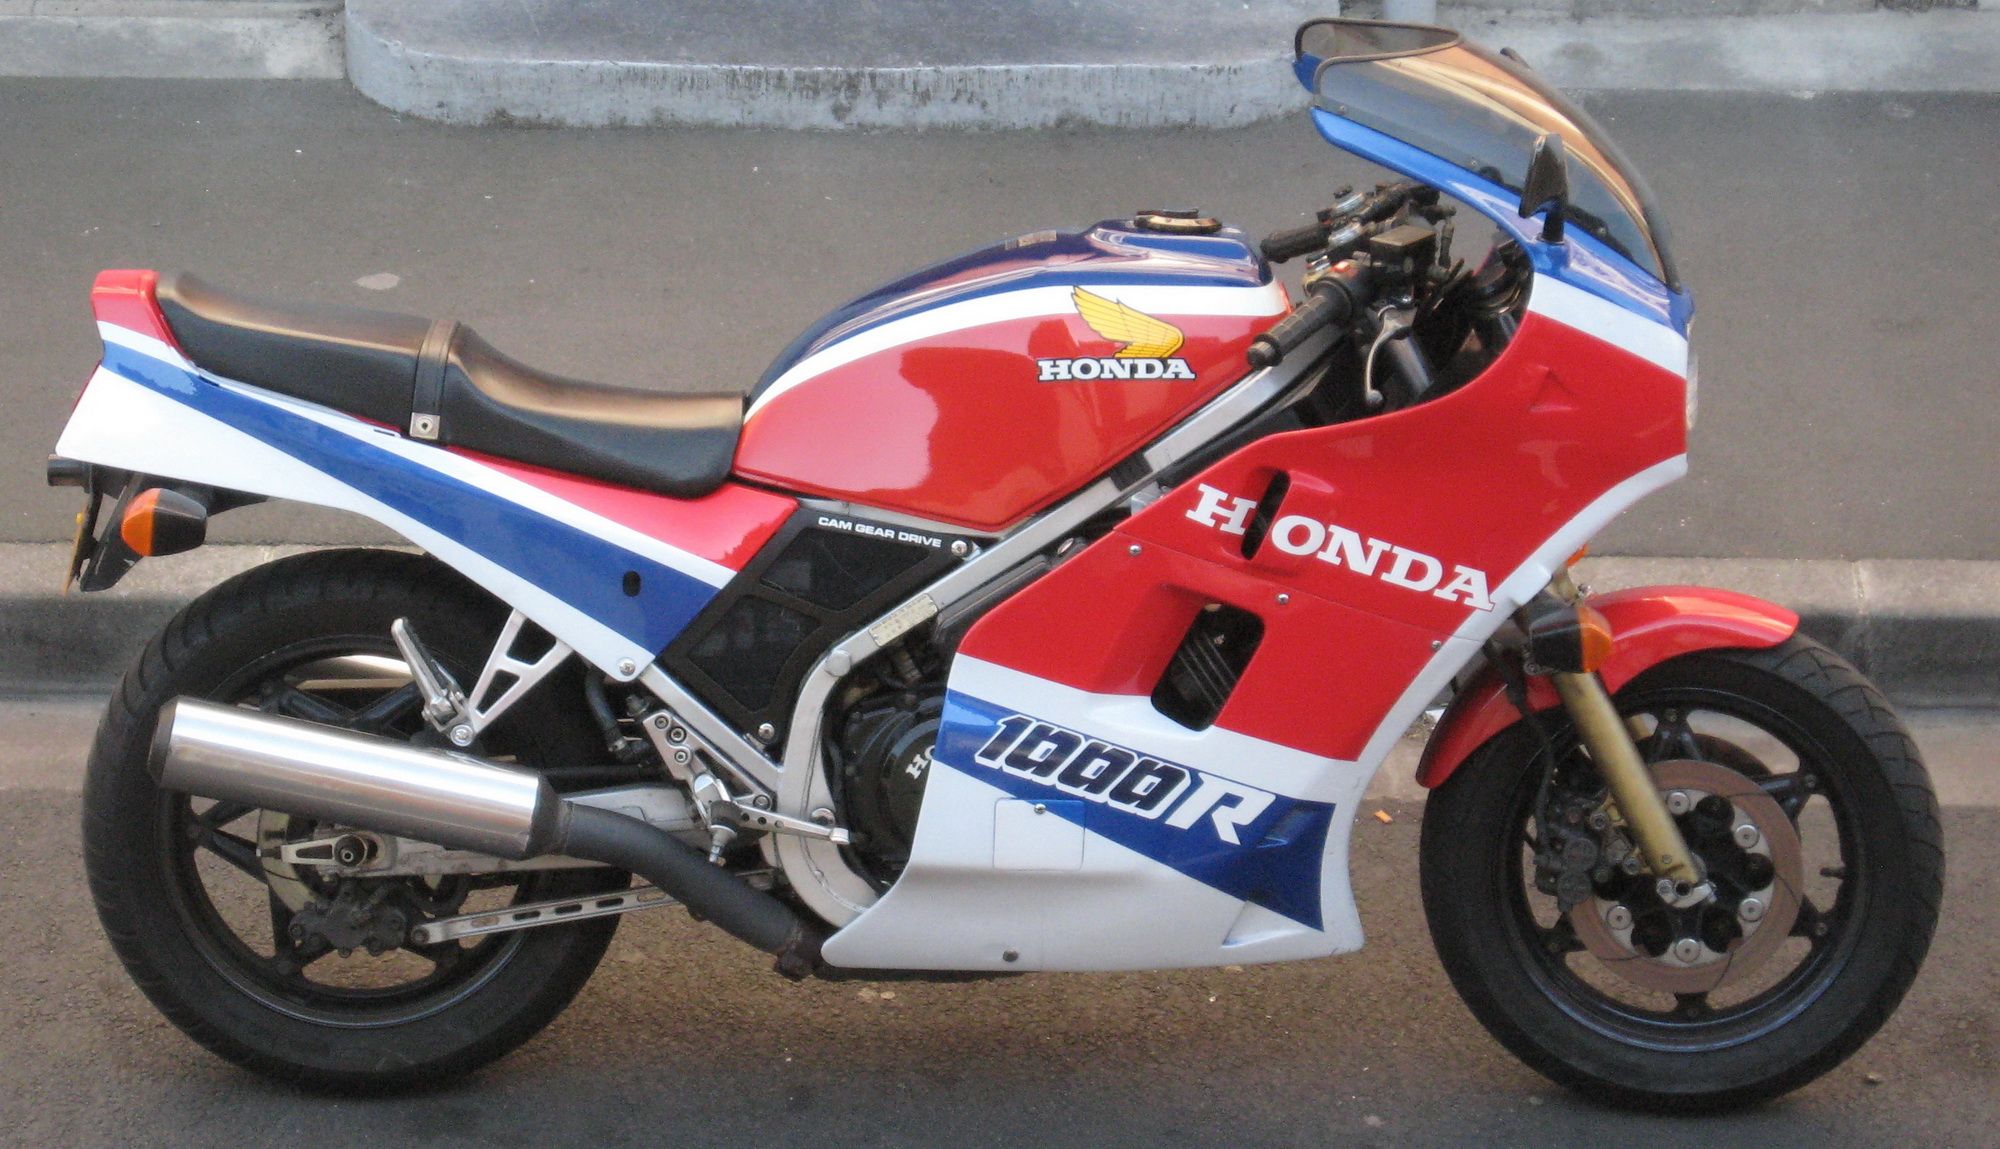 Honda vf 1000r modifications